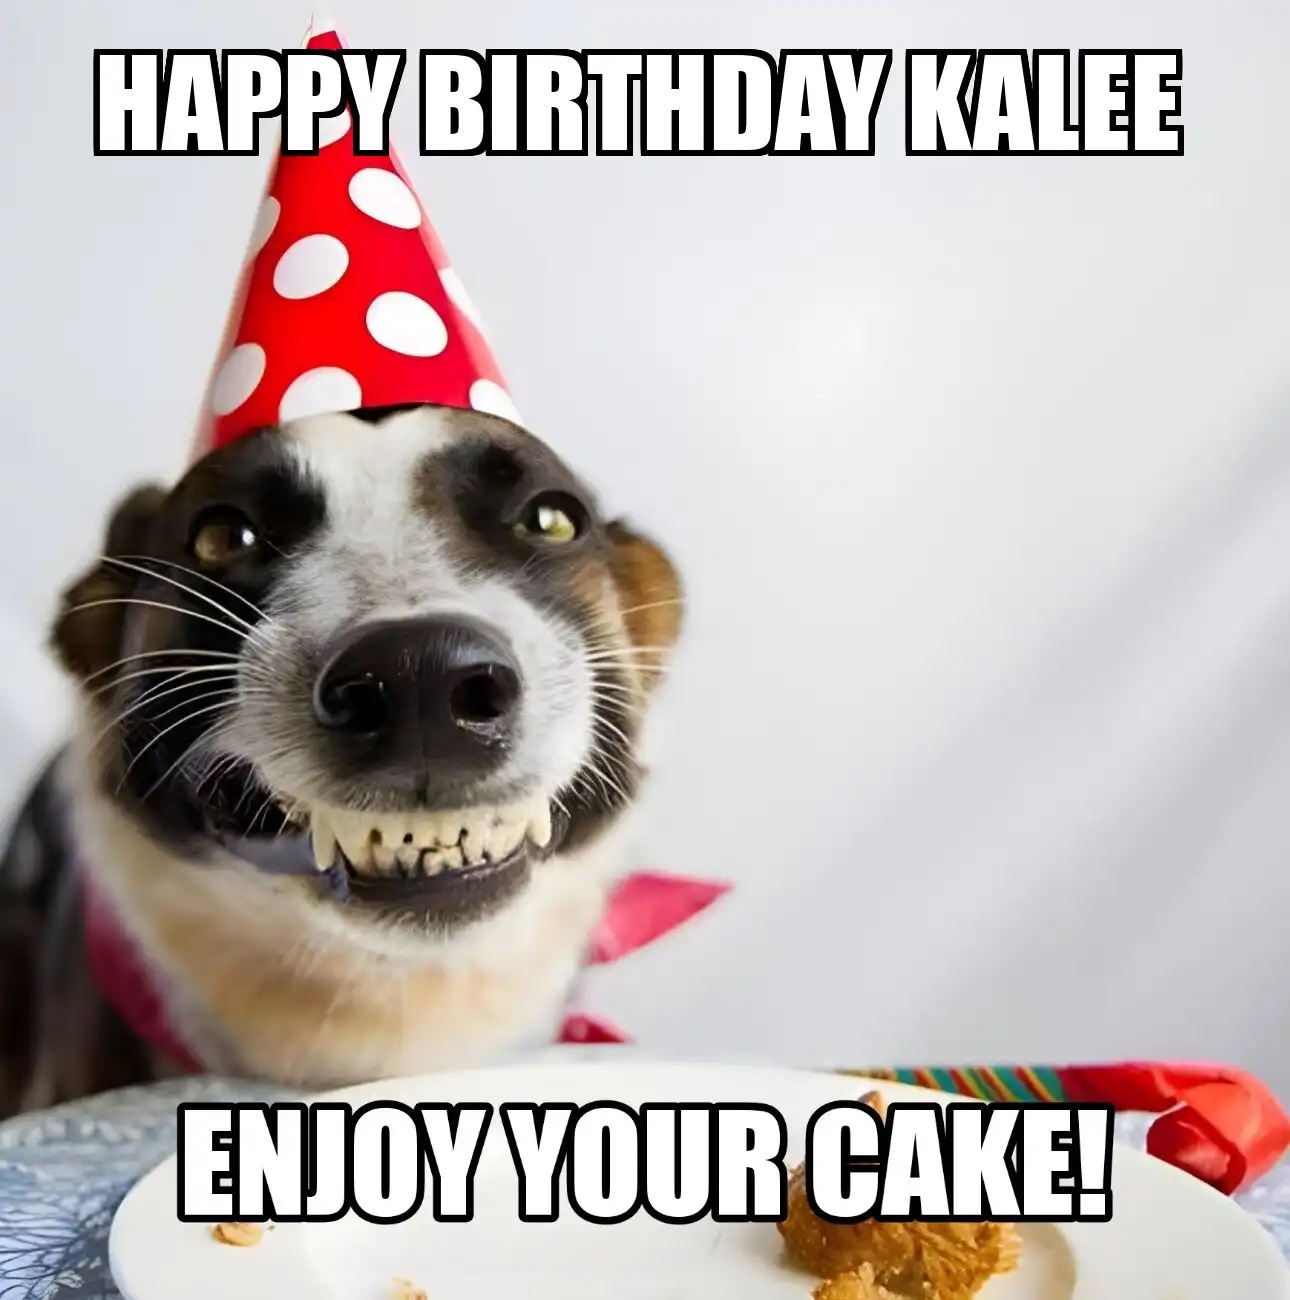 Happy Birthday Kalee Enjoy Your Cake Dog Meme